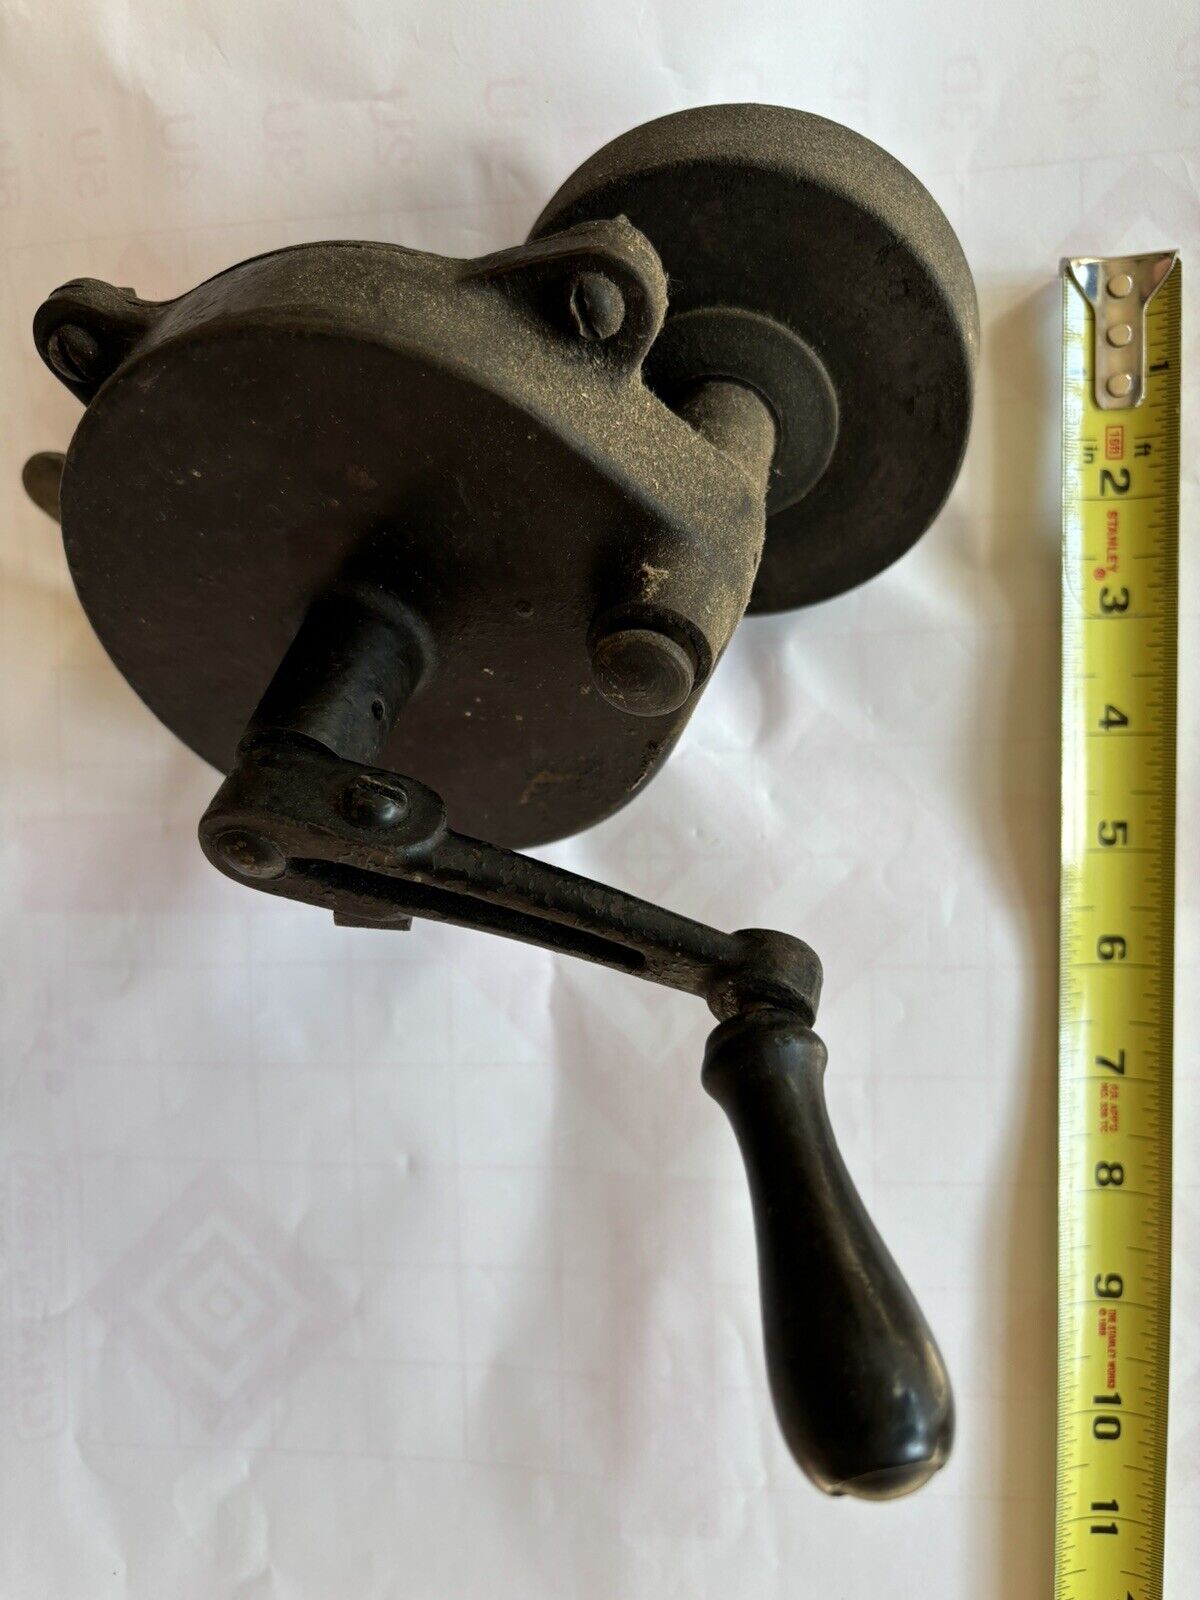 Vintage Manual hand crank grinder wheel clamps to work bench